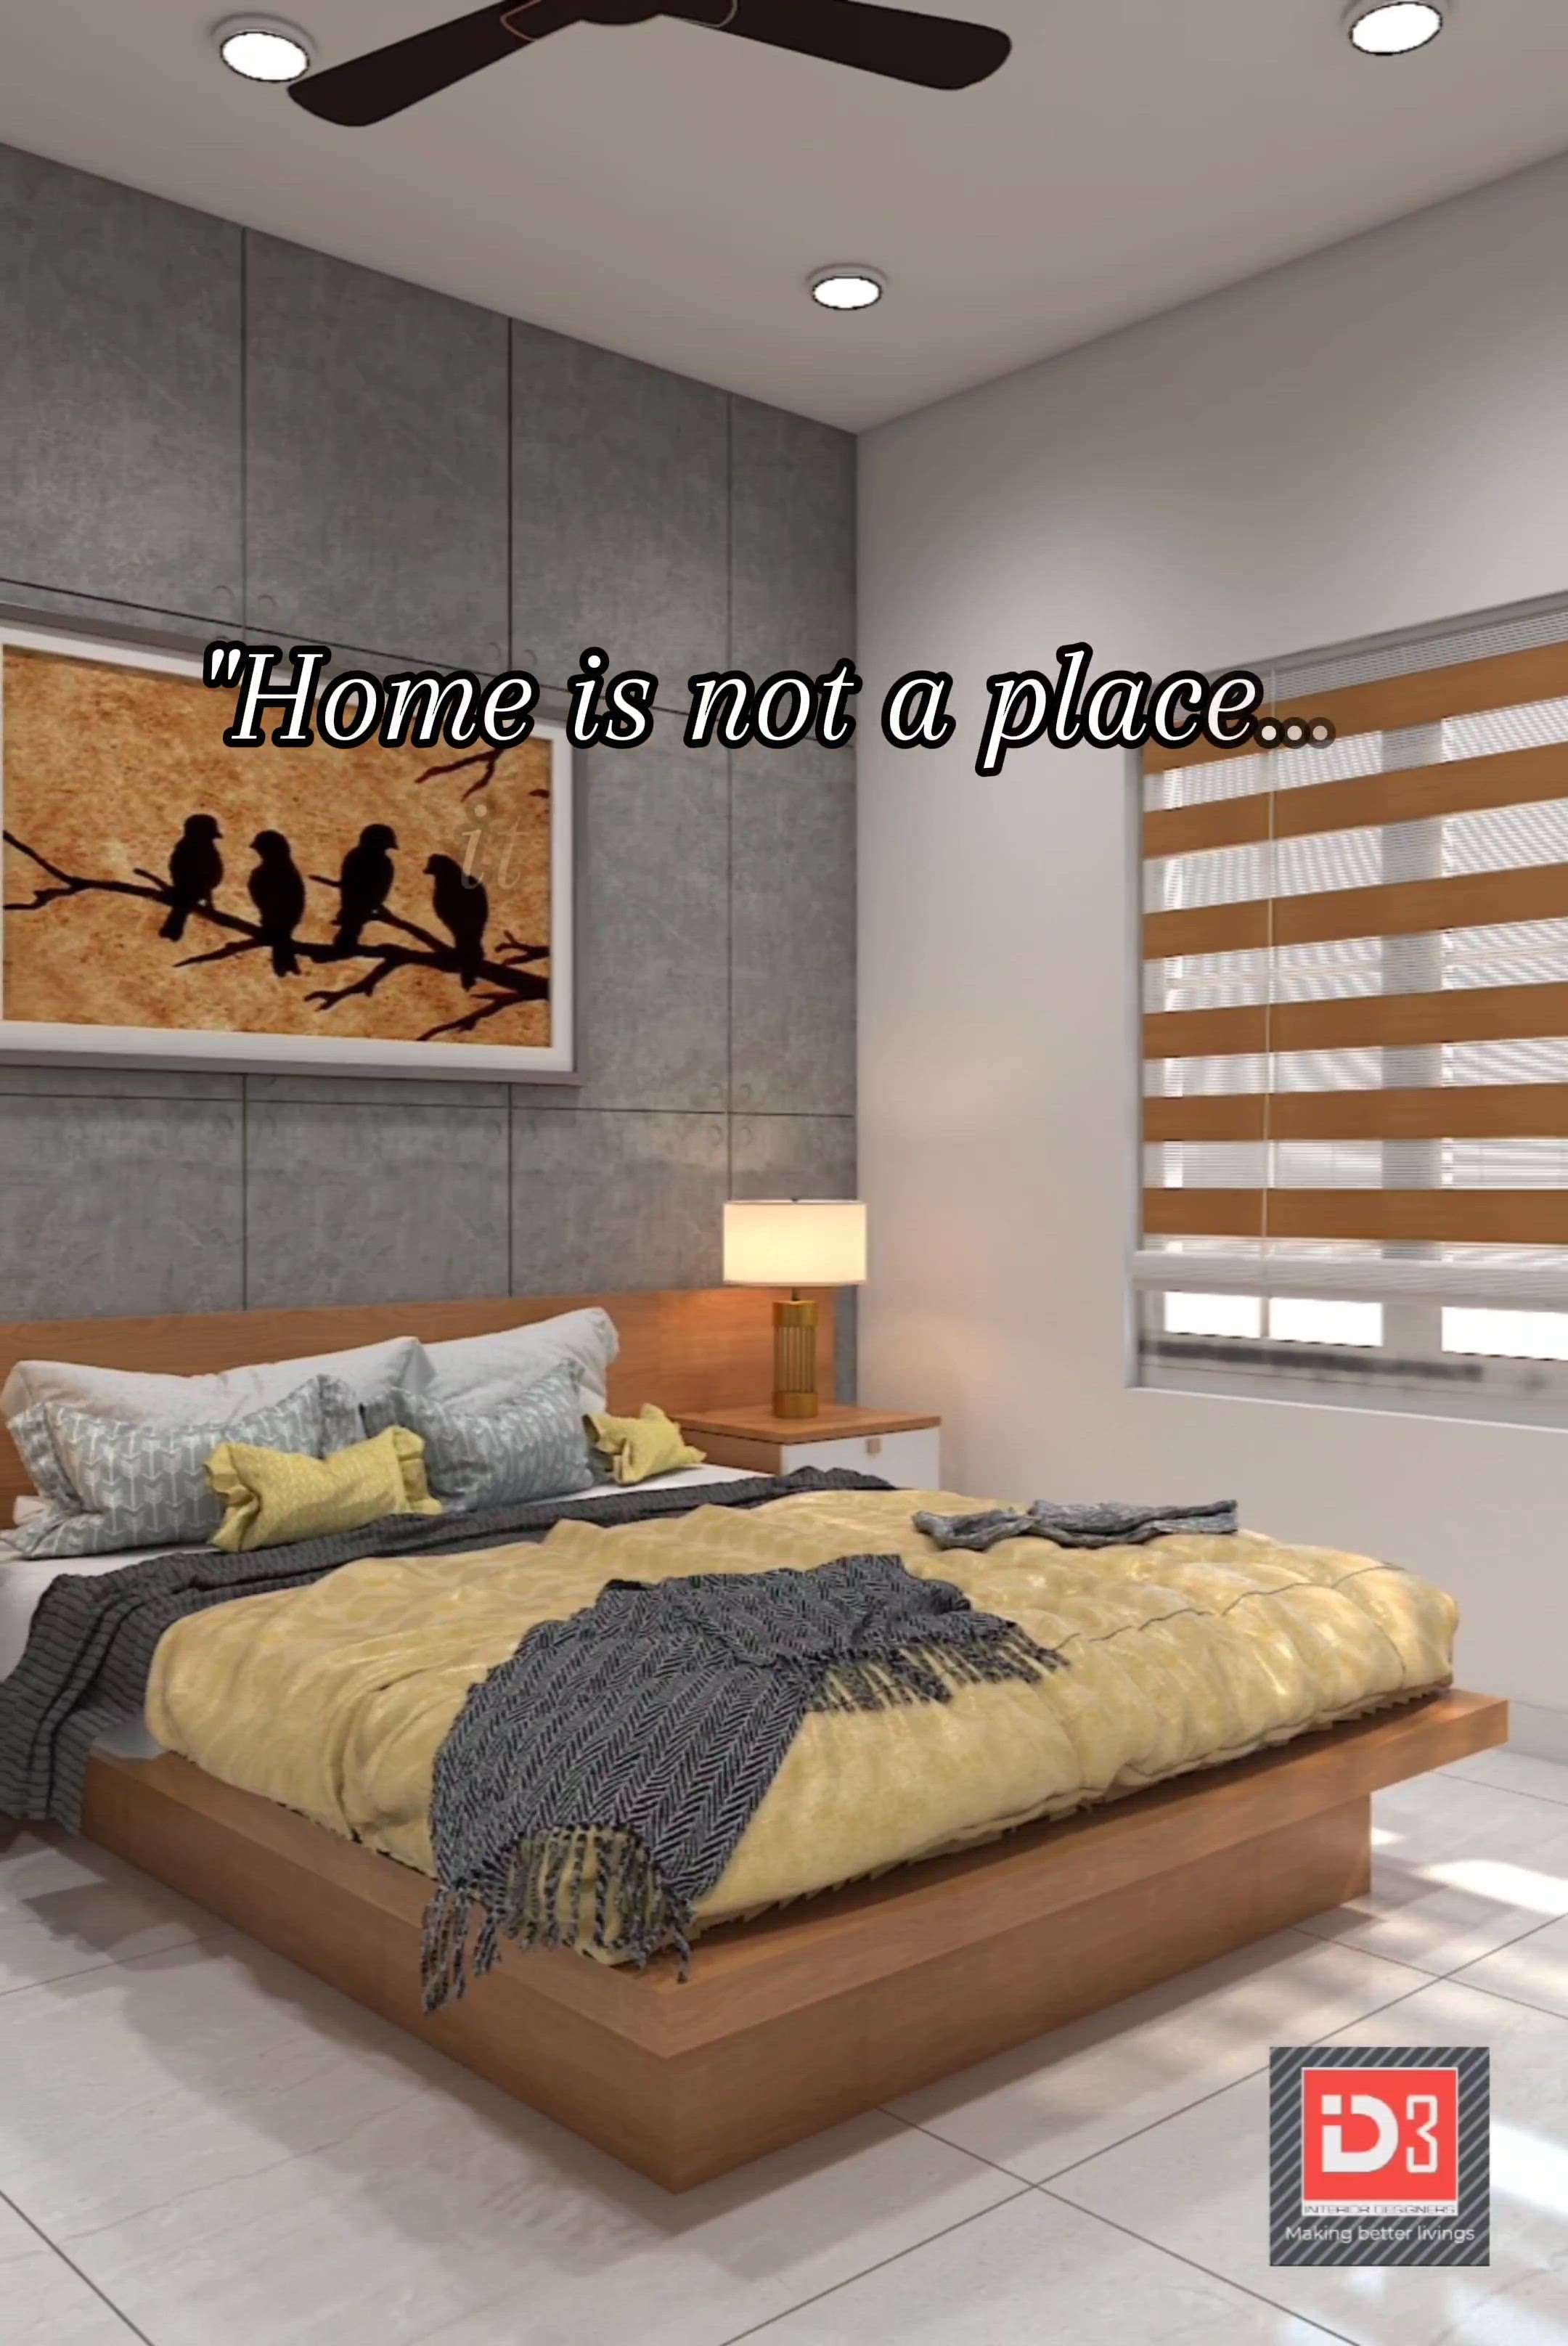 #home
.
.
ID3 INTERIORS
.
.
#decorating #interiordecor #homedesign
#modernhome #interiordesign #decorlovers